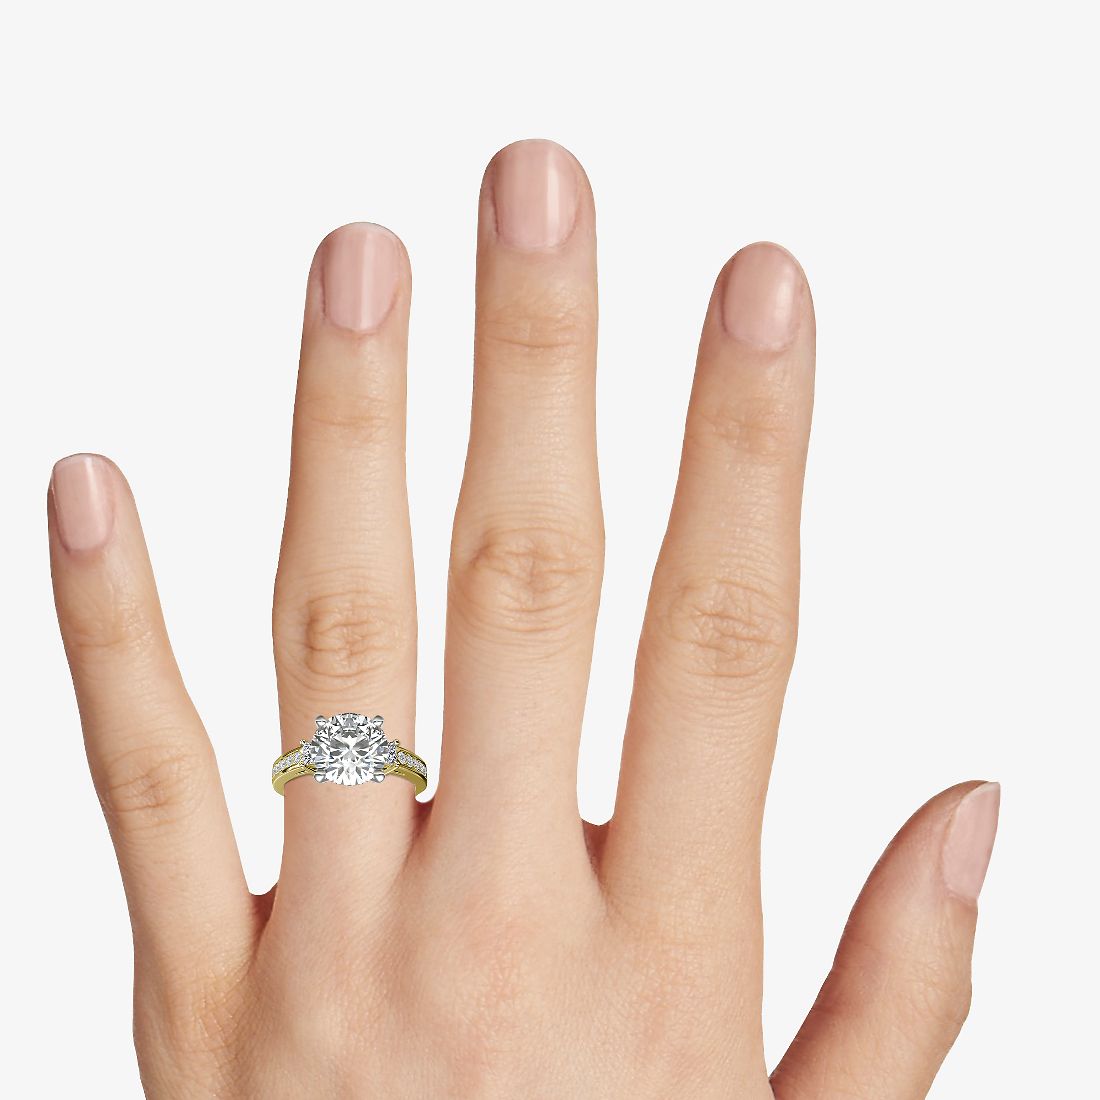 3 Stone Princess-Cut Pave Diamond Engagement Ring 14K Yellow